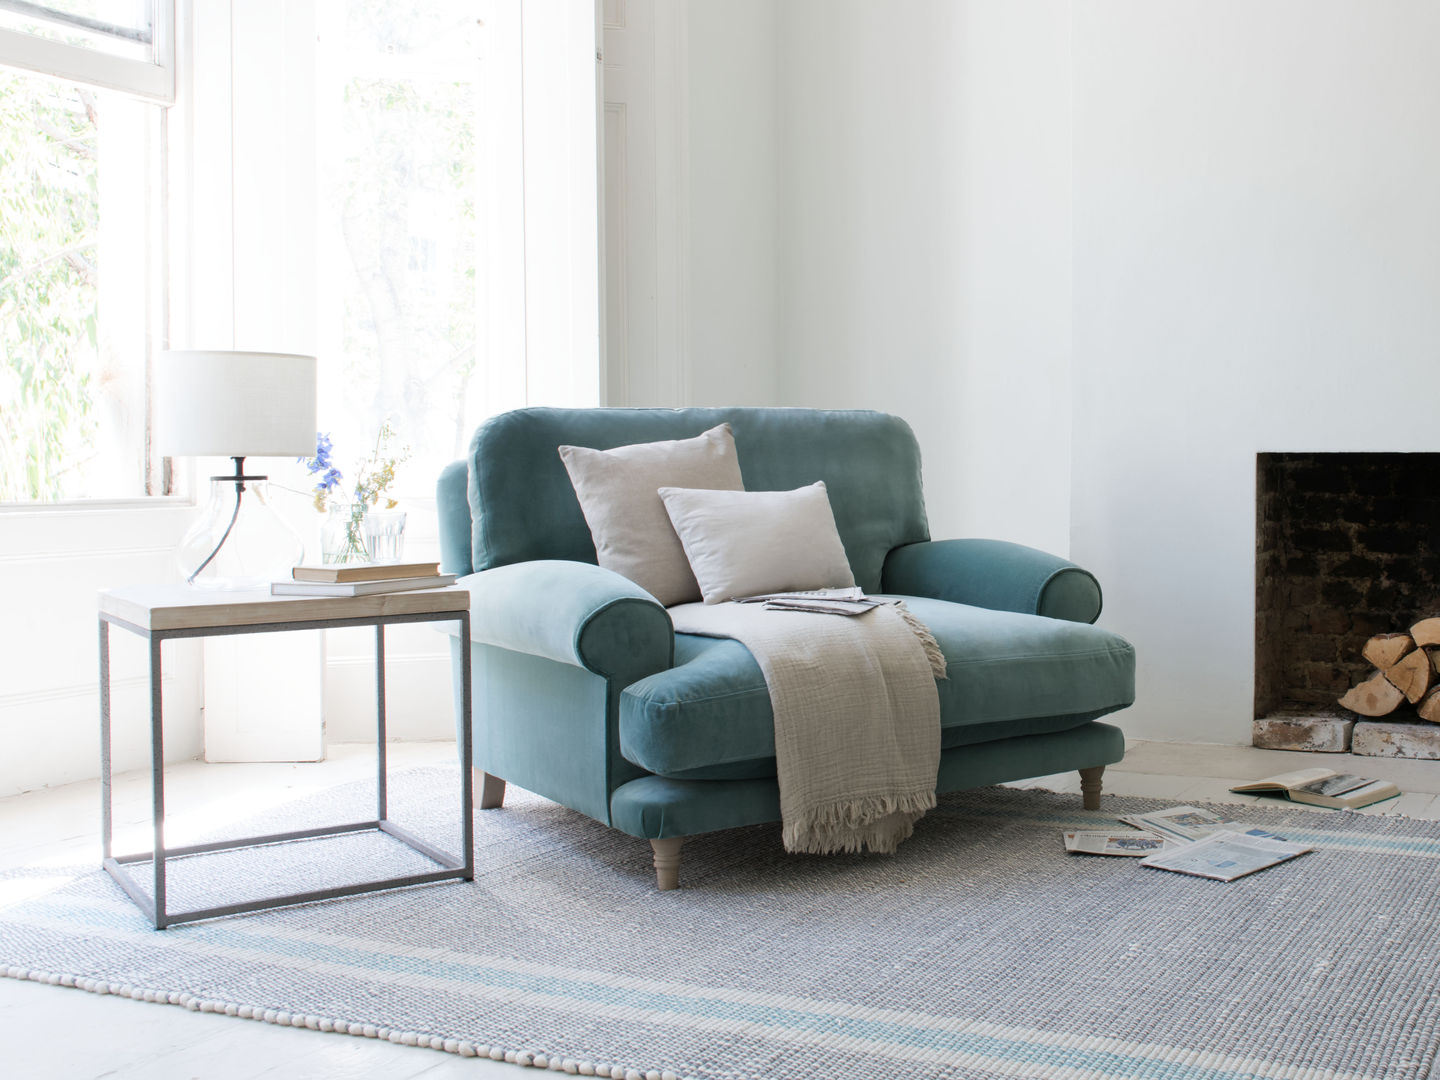 Slowcoach love seat Loaf Salas modernas armchair,teal,green,sea blue,velvet,love seat,living room,sofa